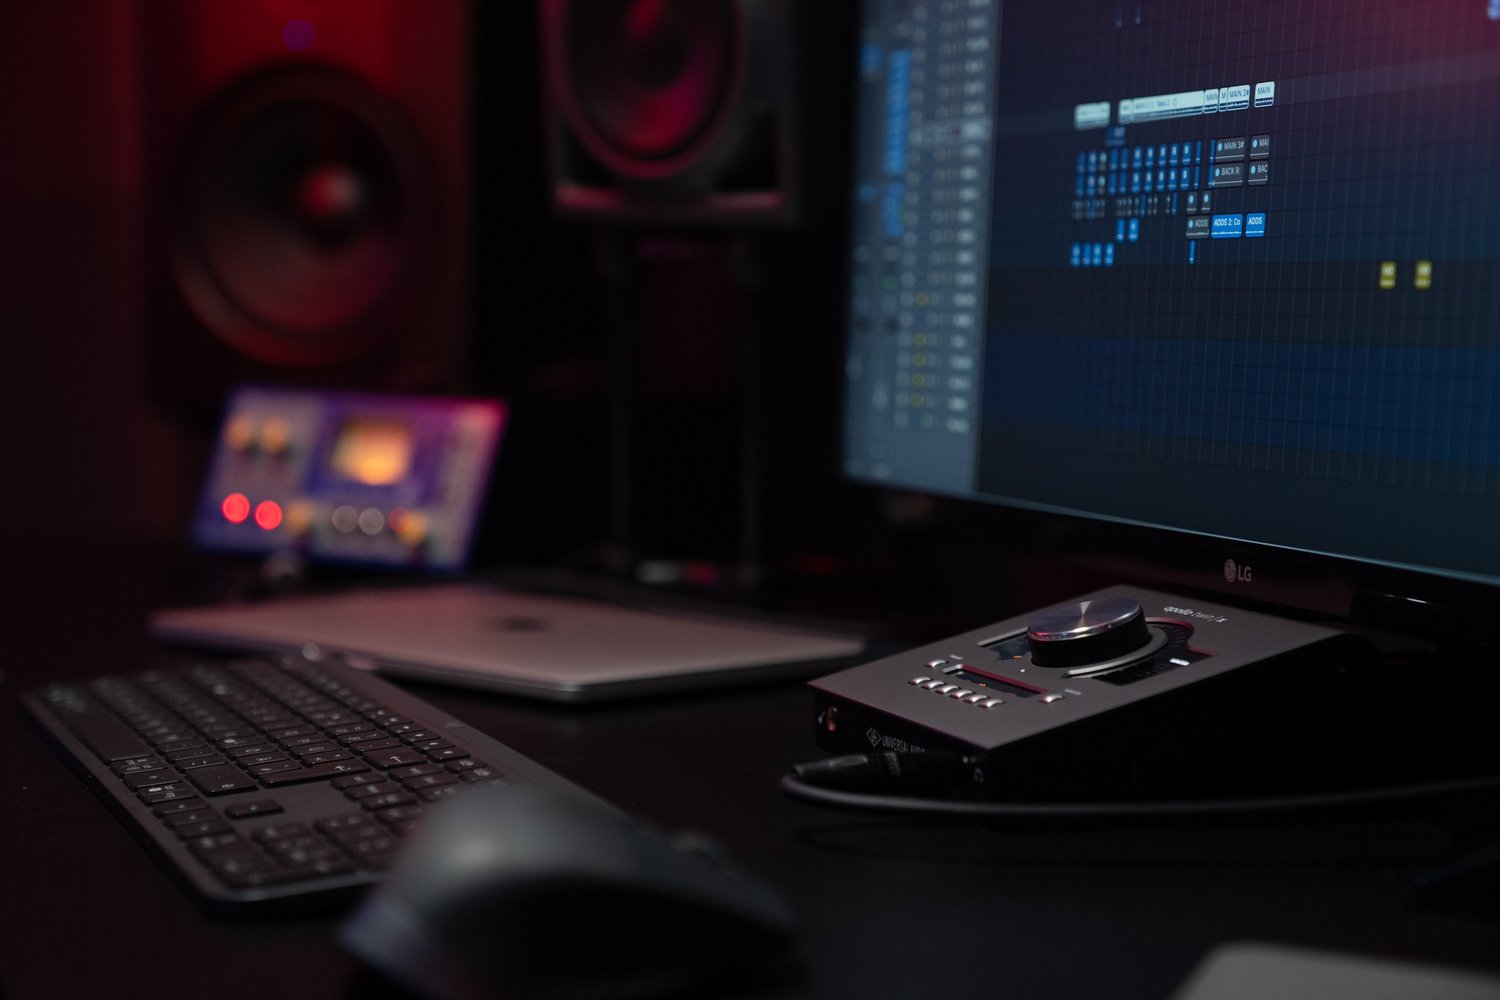 Studio Gears: Music producers, entrepreneurs, artists, and content creators